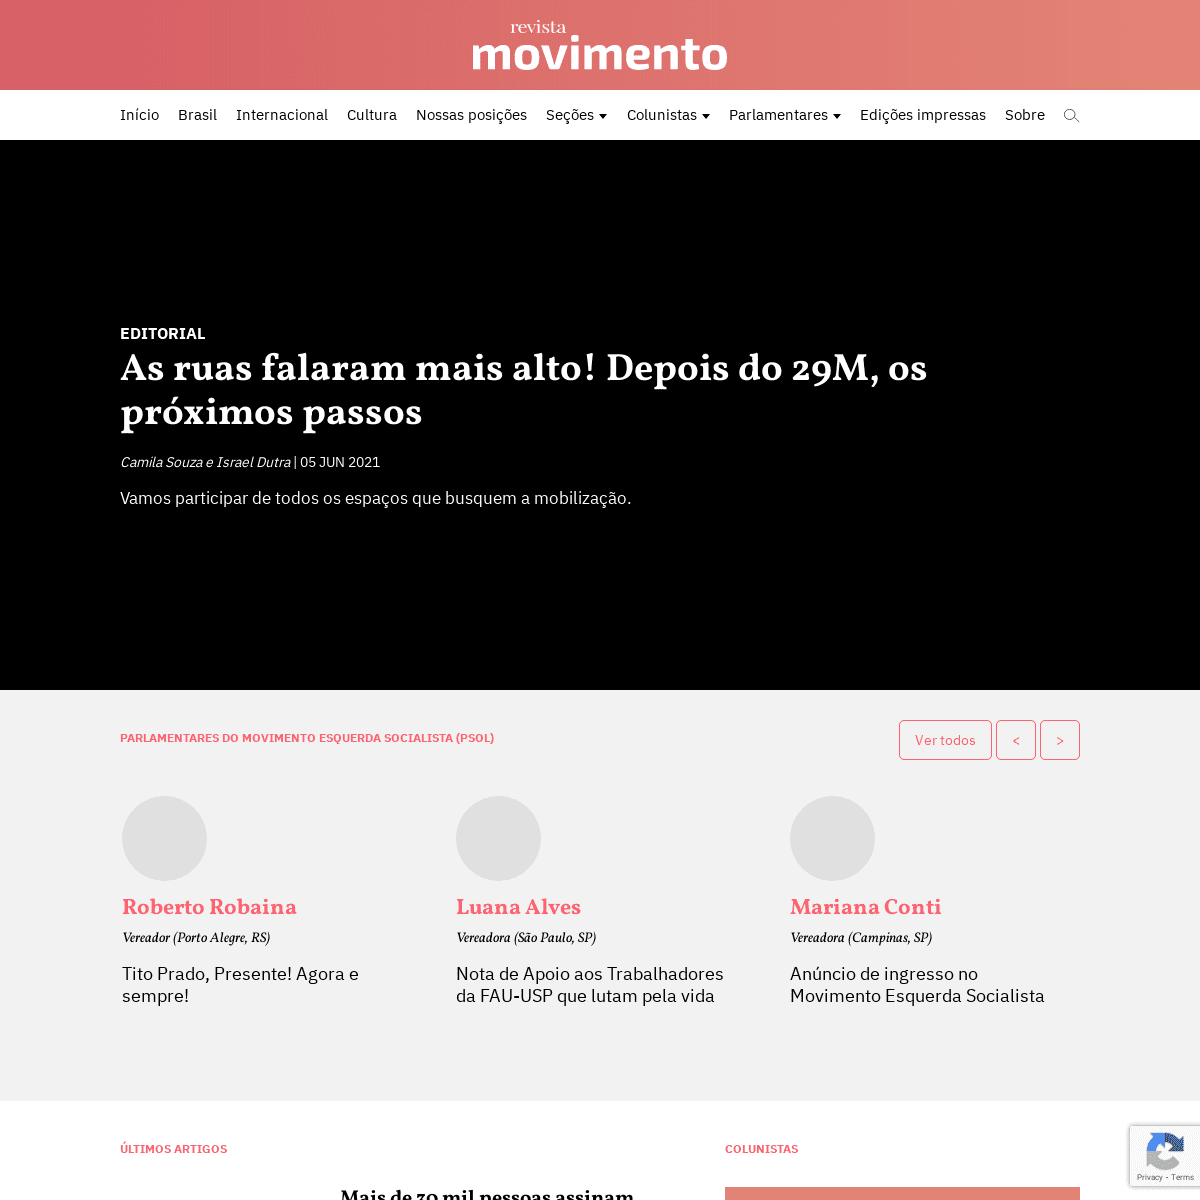 A complete backup of https://movimentorevista.com.br